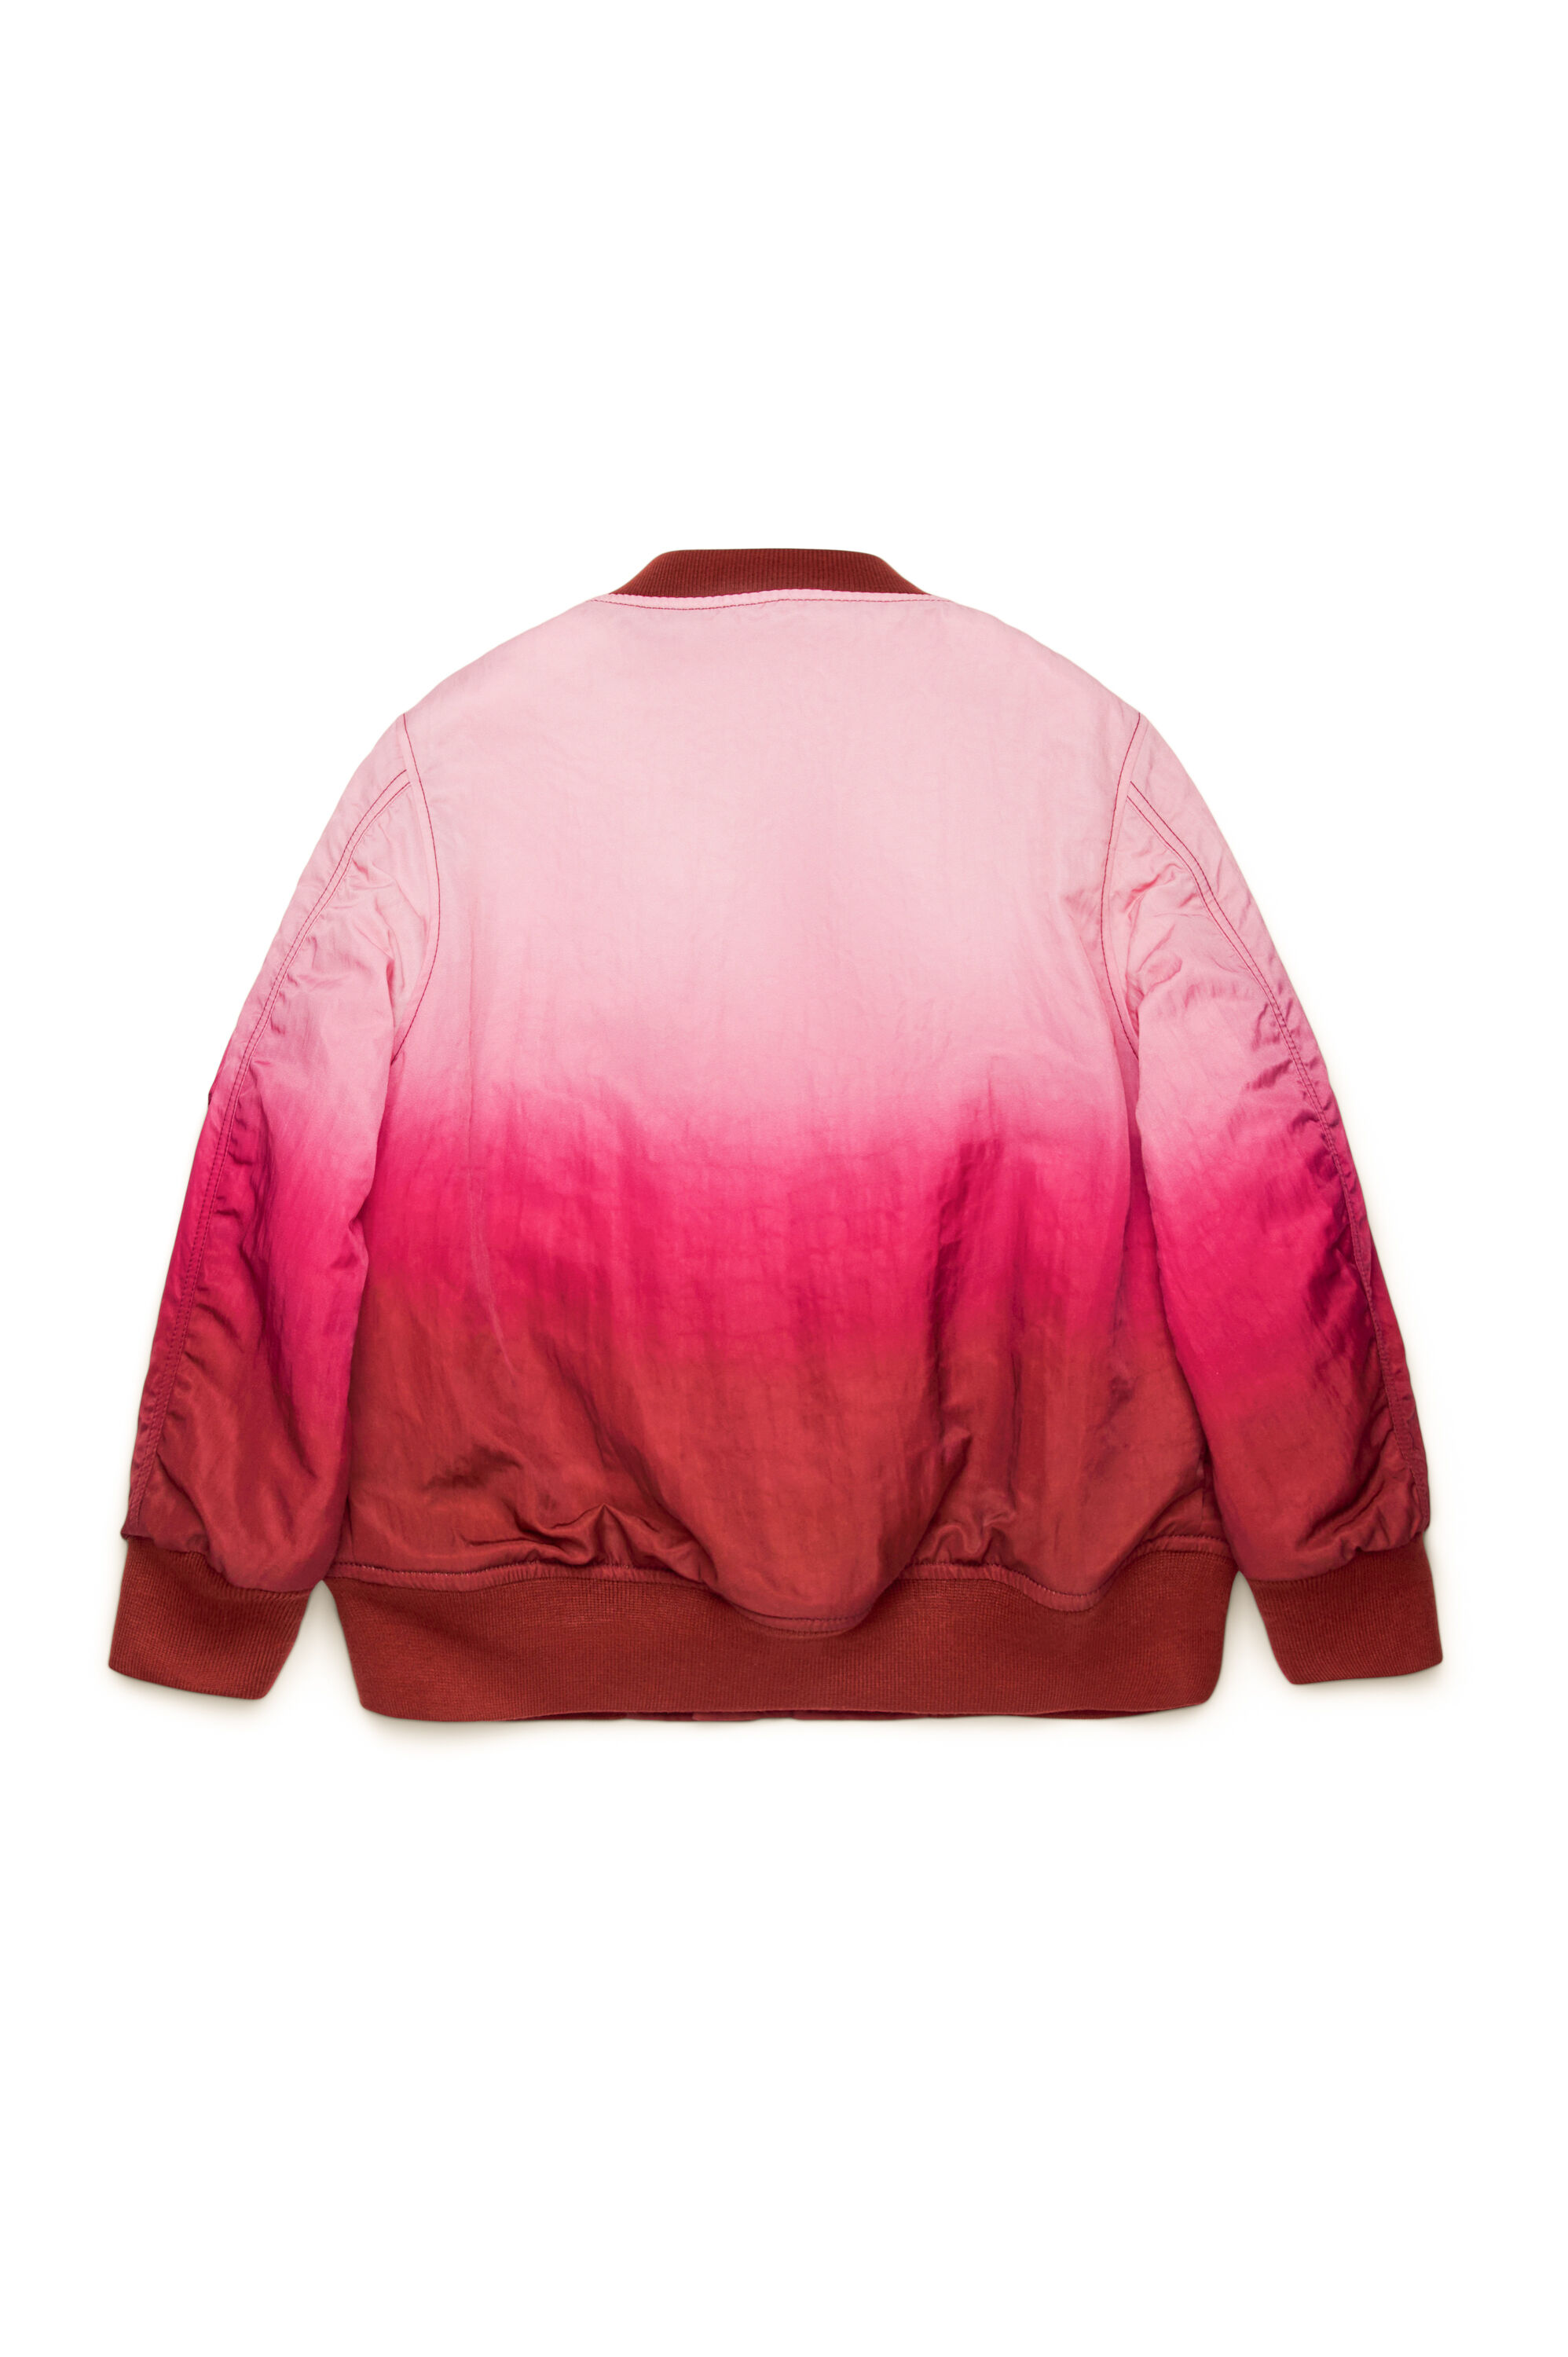 Diesel - JCOMMON, Unisex Bomber jacket in dégradé nylon in Pink - Image 2